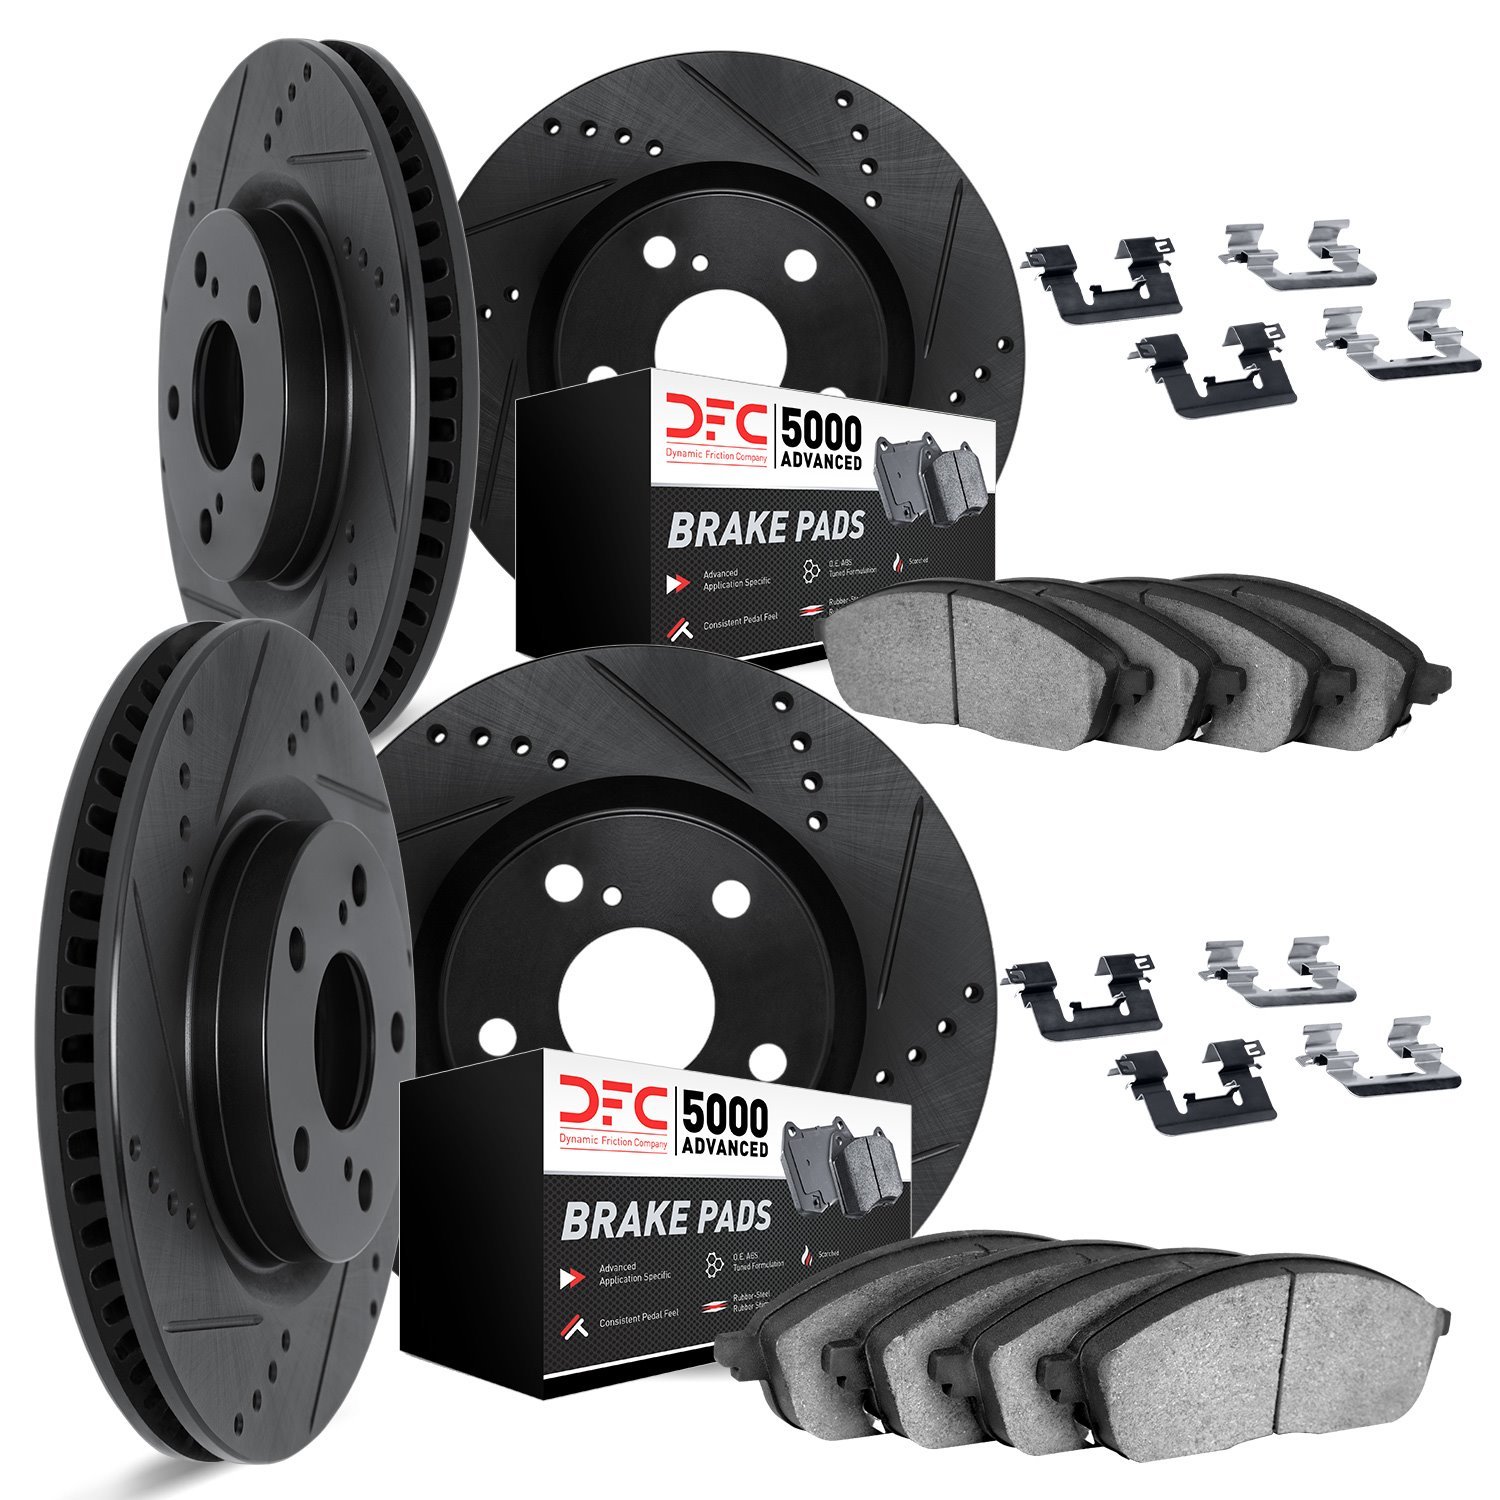 8514-39033 Drilled/Slotted Brake Rotors w/5000 Advanced Brake Pads Kit & Hardware [Black], Fits Select Mopar, Position: Front an